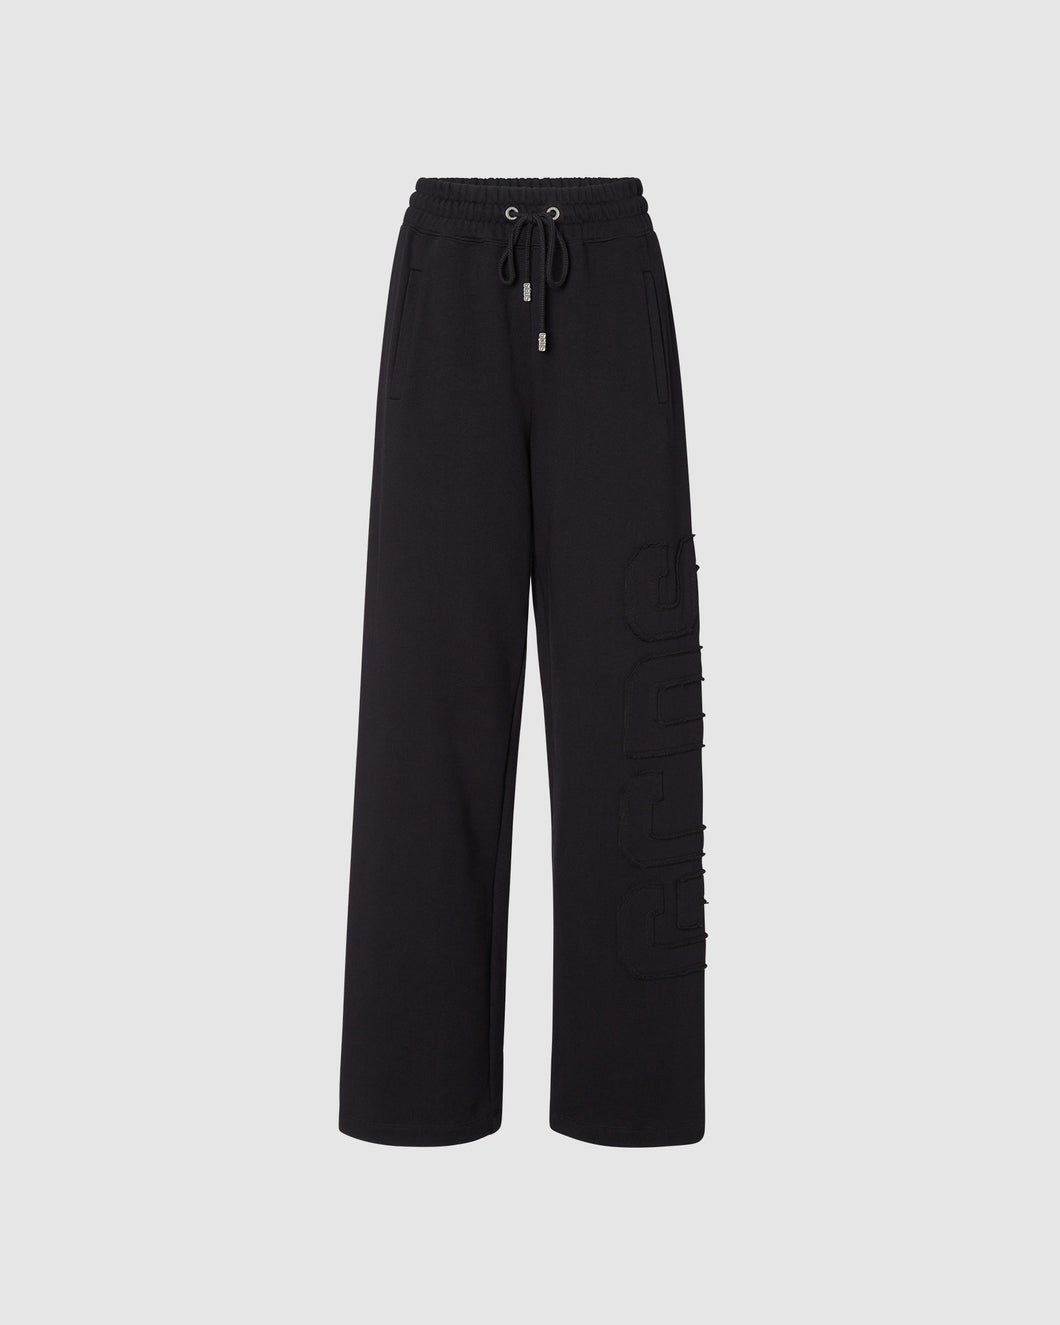 Embroidered Gcds wide sweatbottoms: Women Trousers Black | GCDS